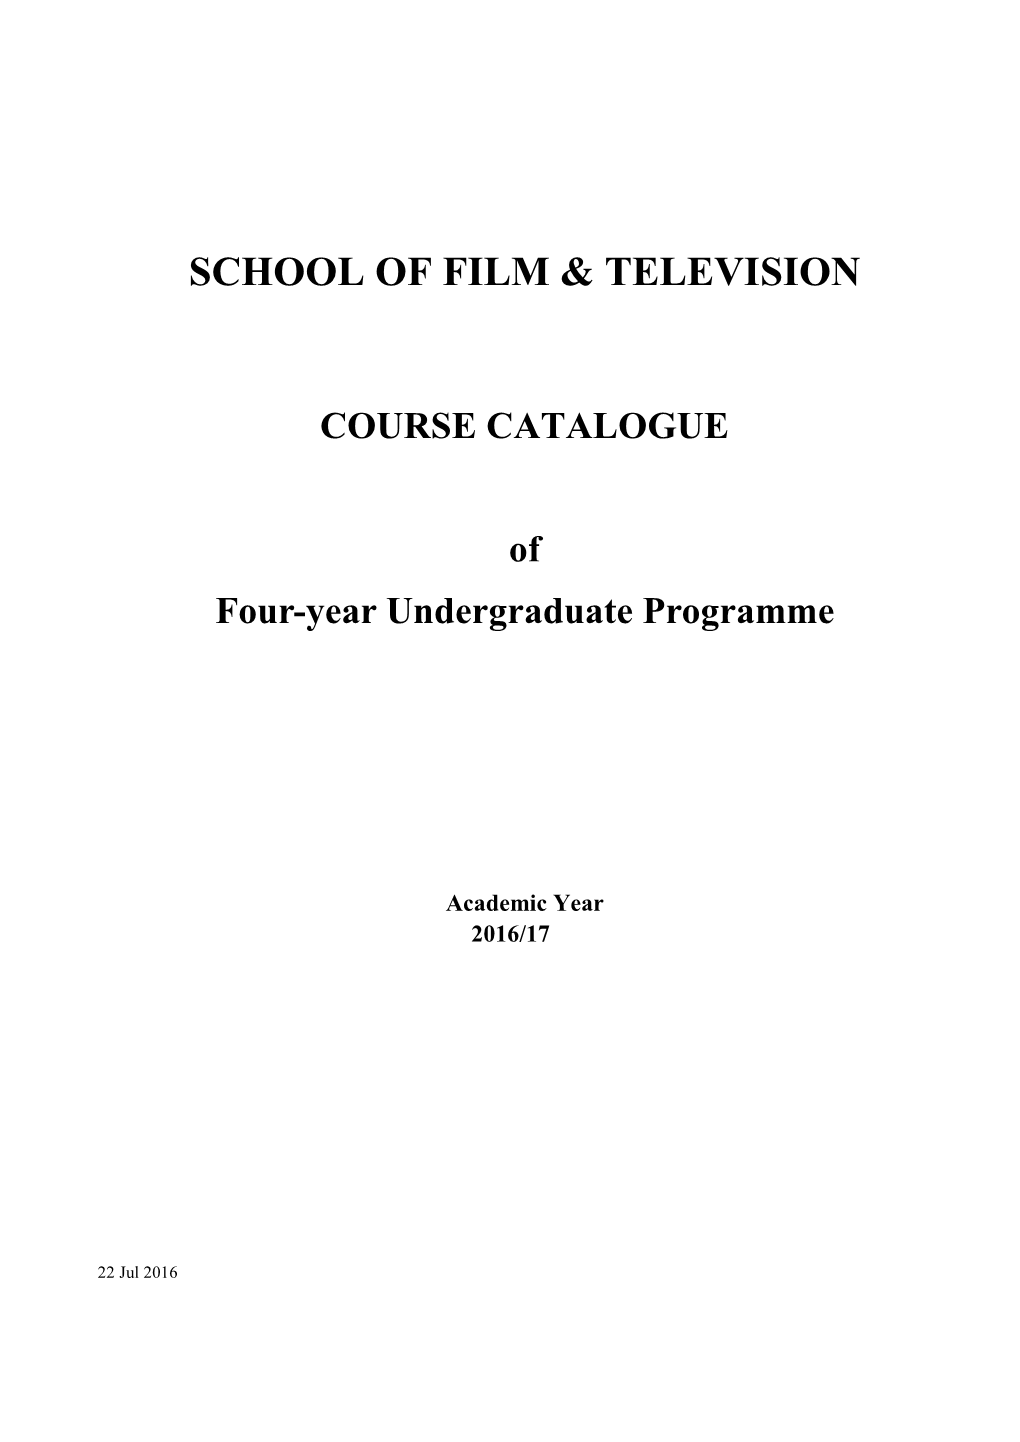 School of Film & Television